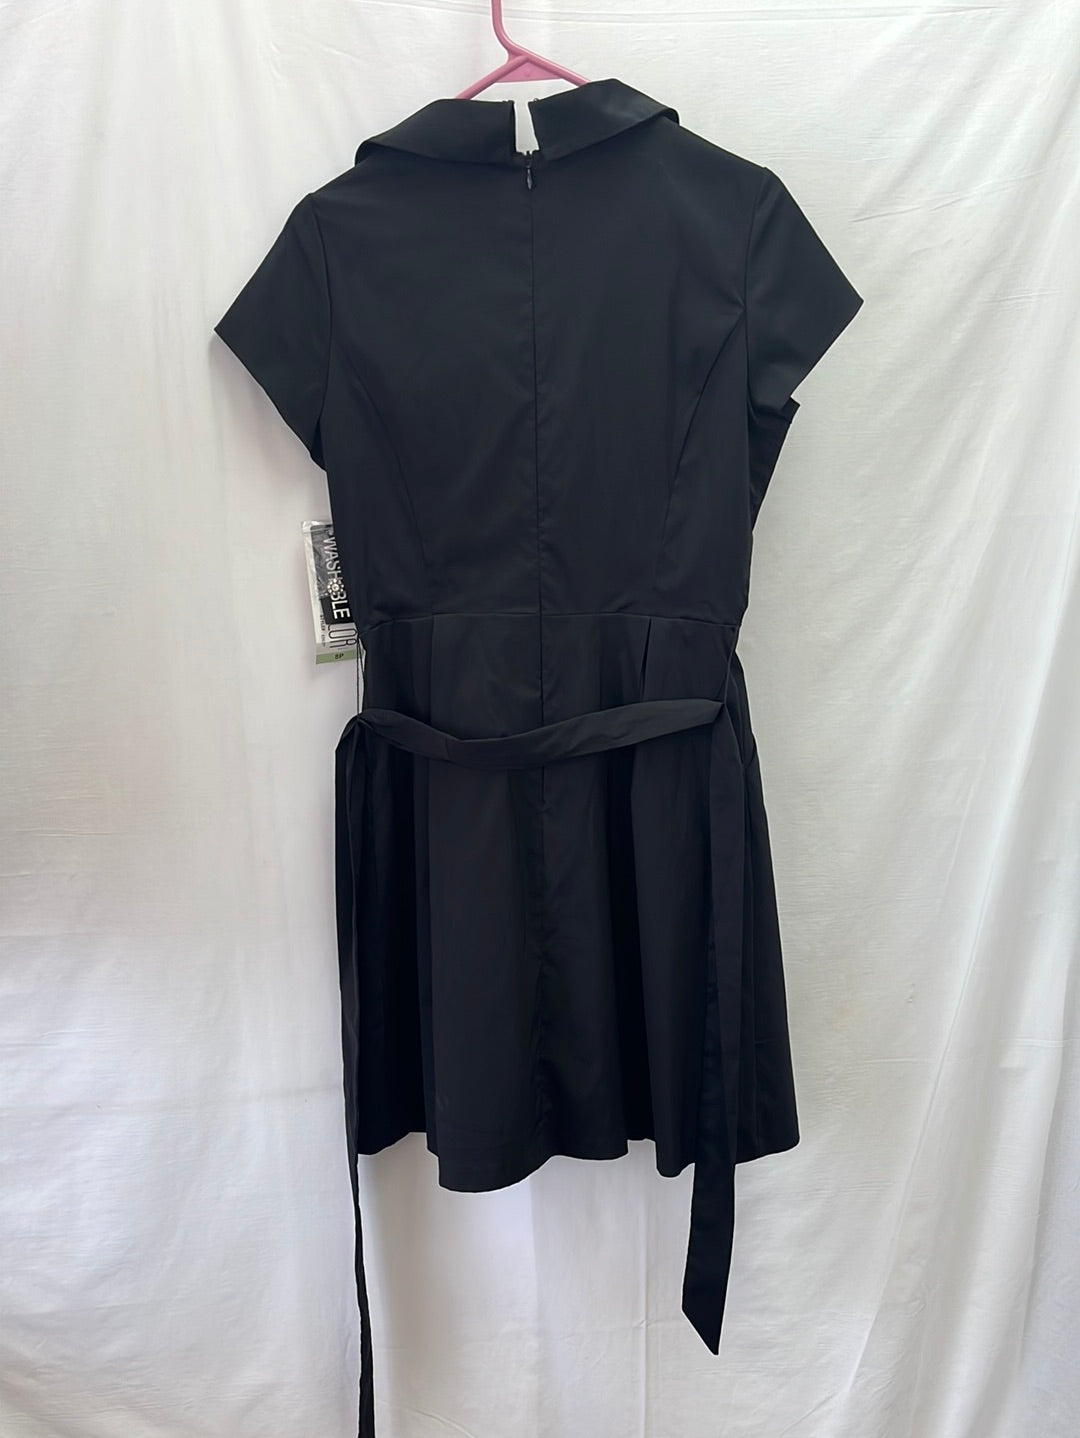 NWT / VTG -- JULIAN TAYLOR Black Sheath Dress w/ Oversized Lapels -- 8P